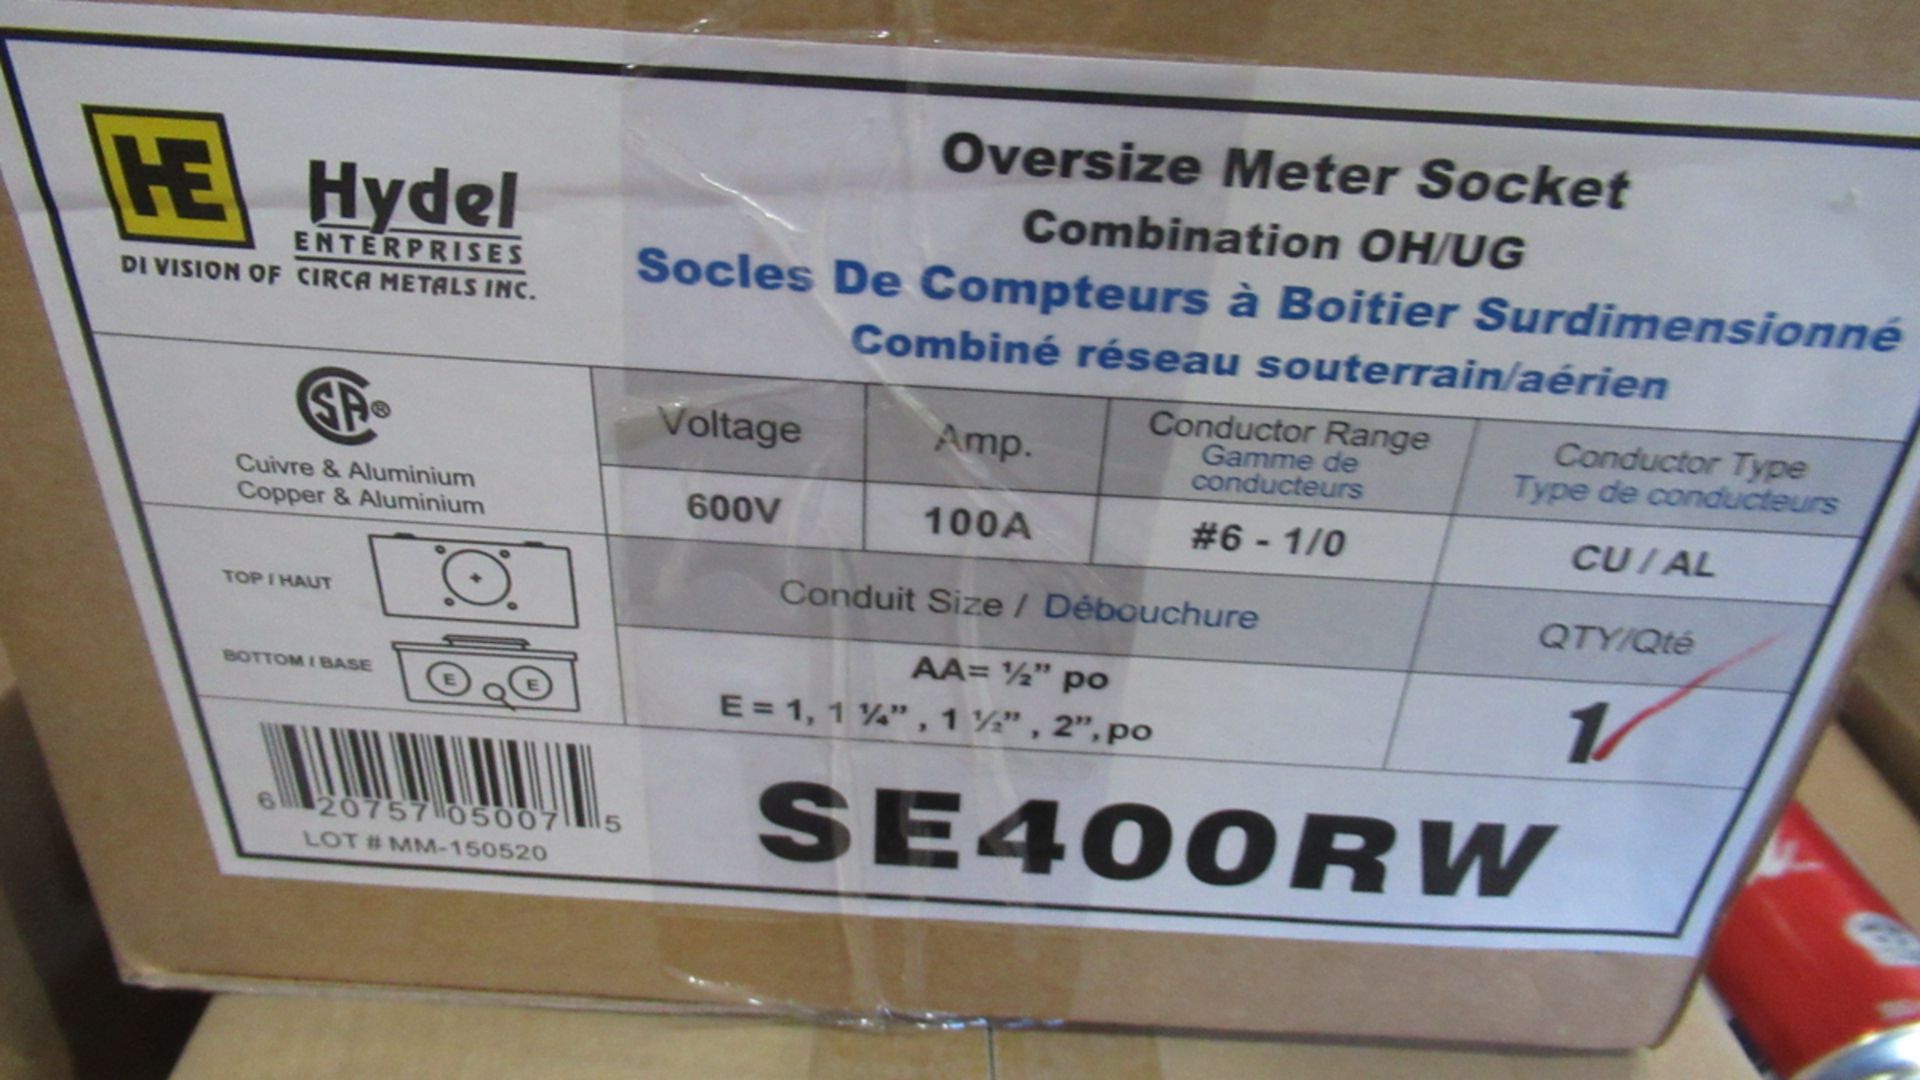 socles à compteurs HYDEL SE400RW, 600 volts, 100A - Image 2 of 2